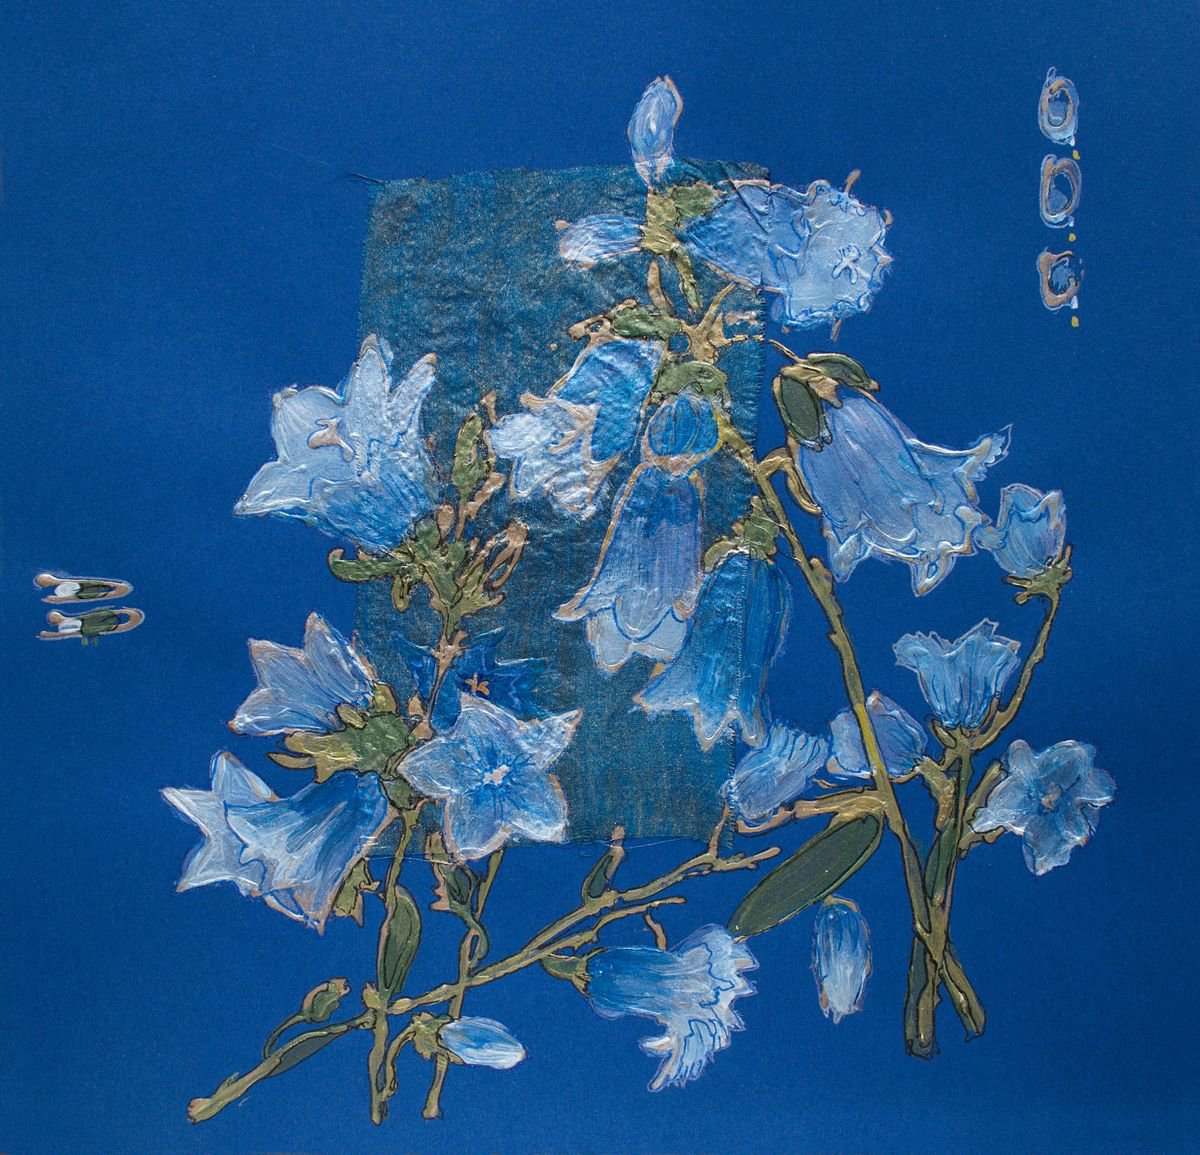 Blue bellflowers by Vlada Lisowska